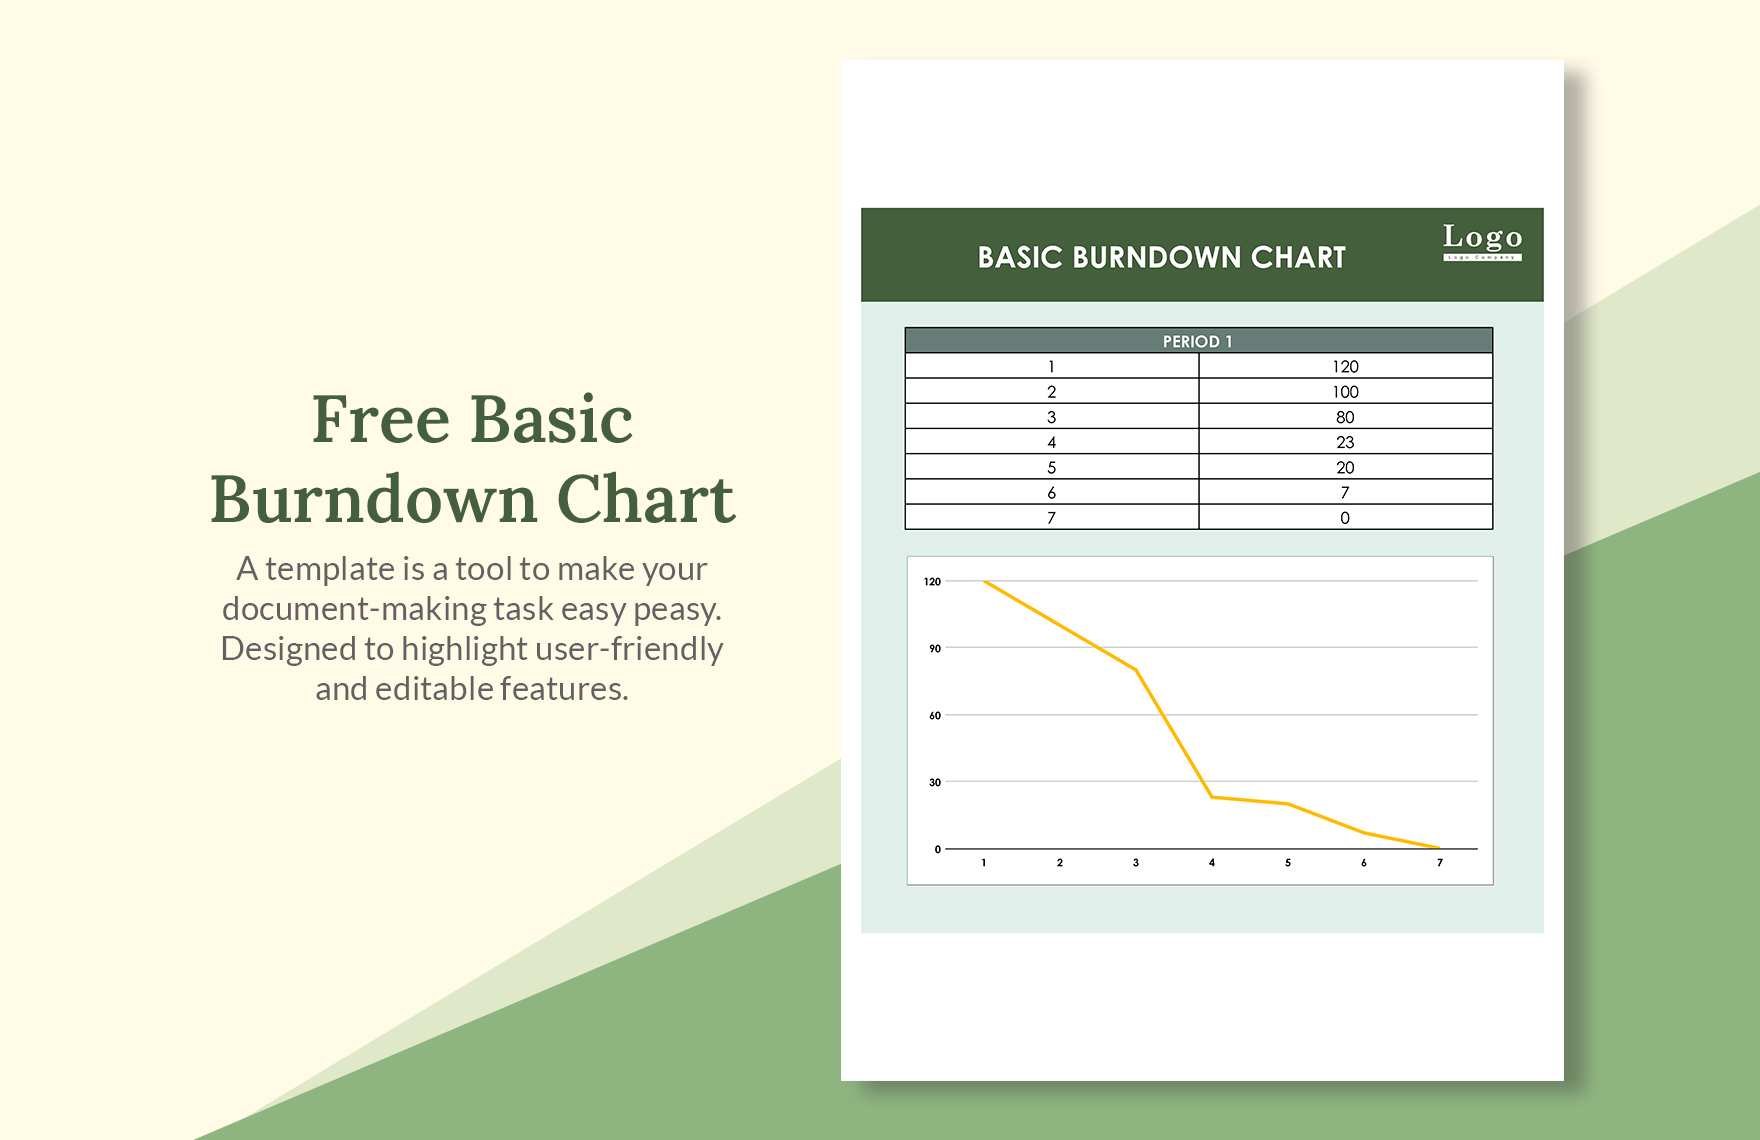 Basic Burndown Chart